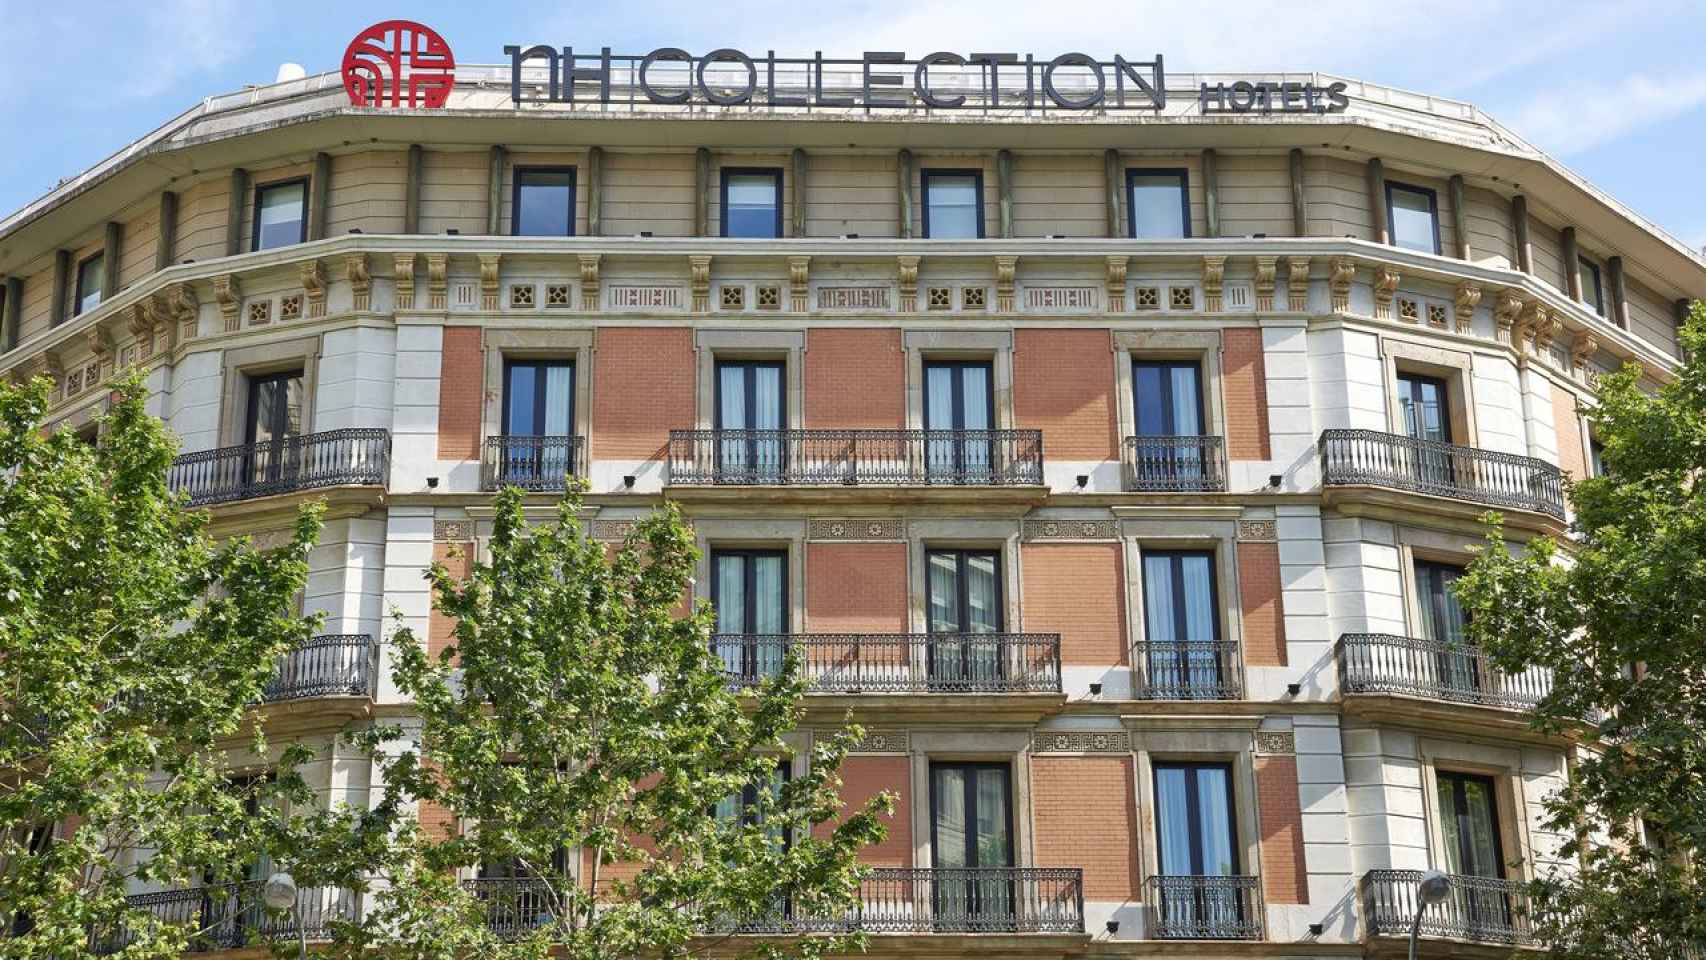 Hotel NH Collection Podium, situado en la calle Bailén de Barcelona / CG